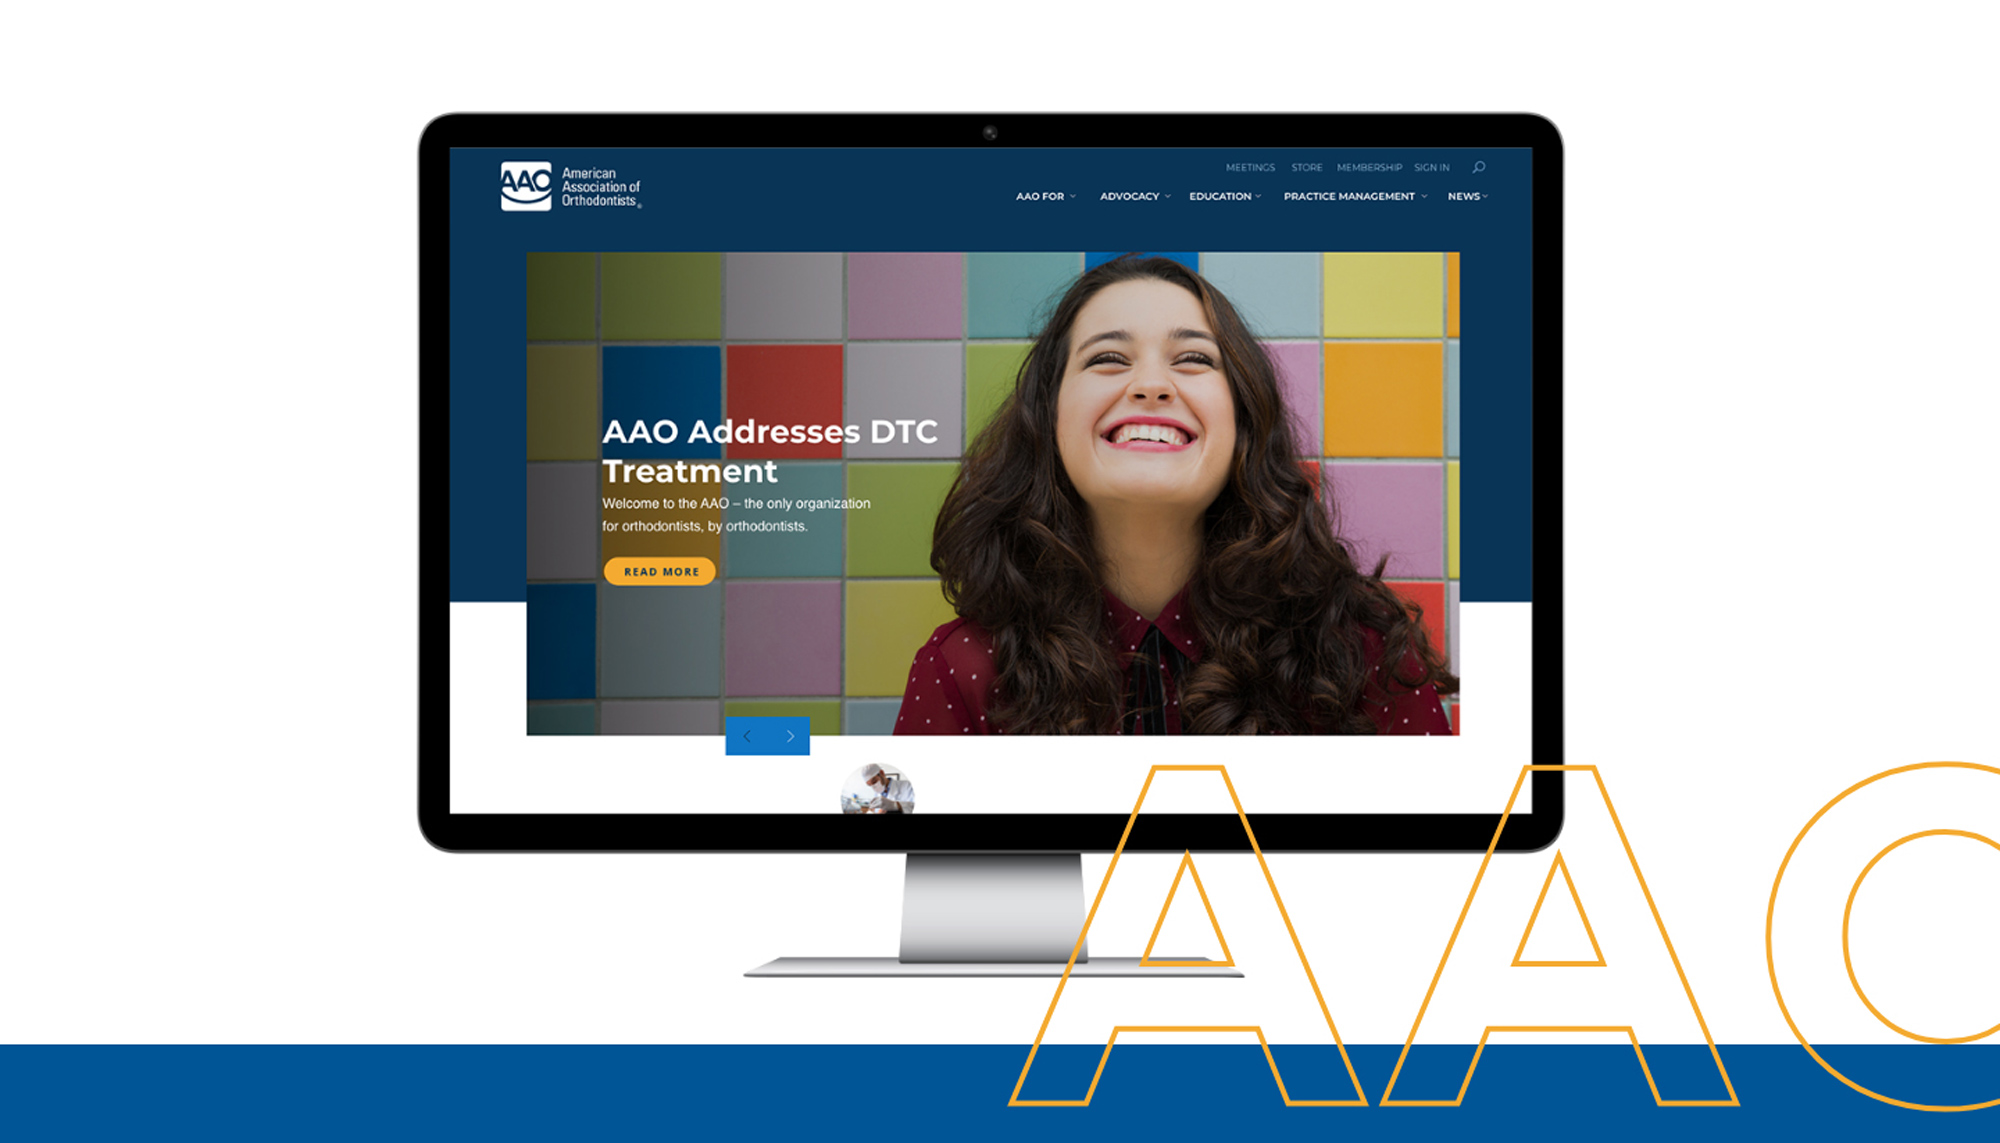 The homepage of the AAO website design